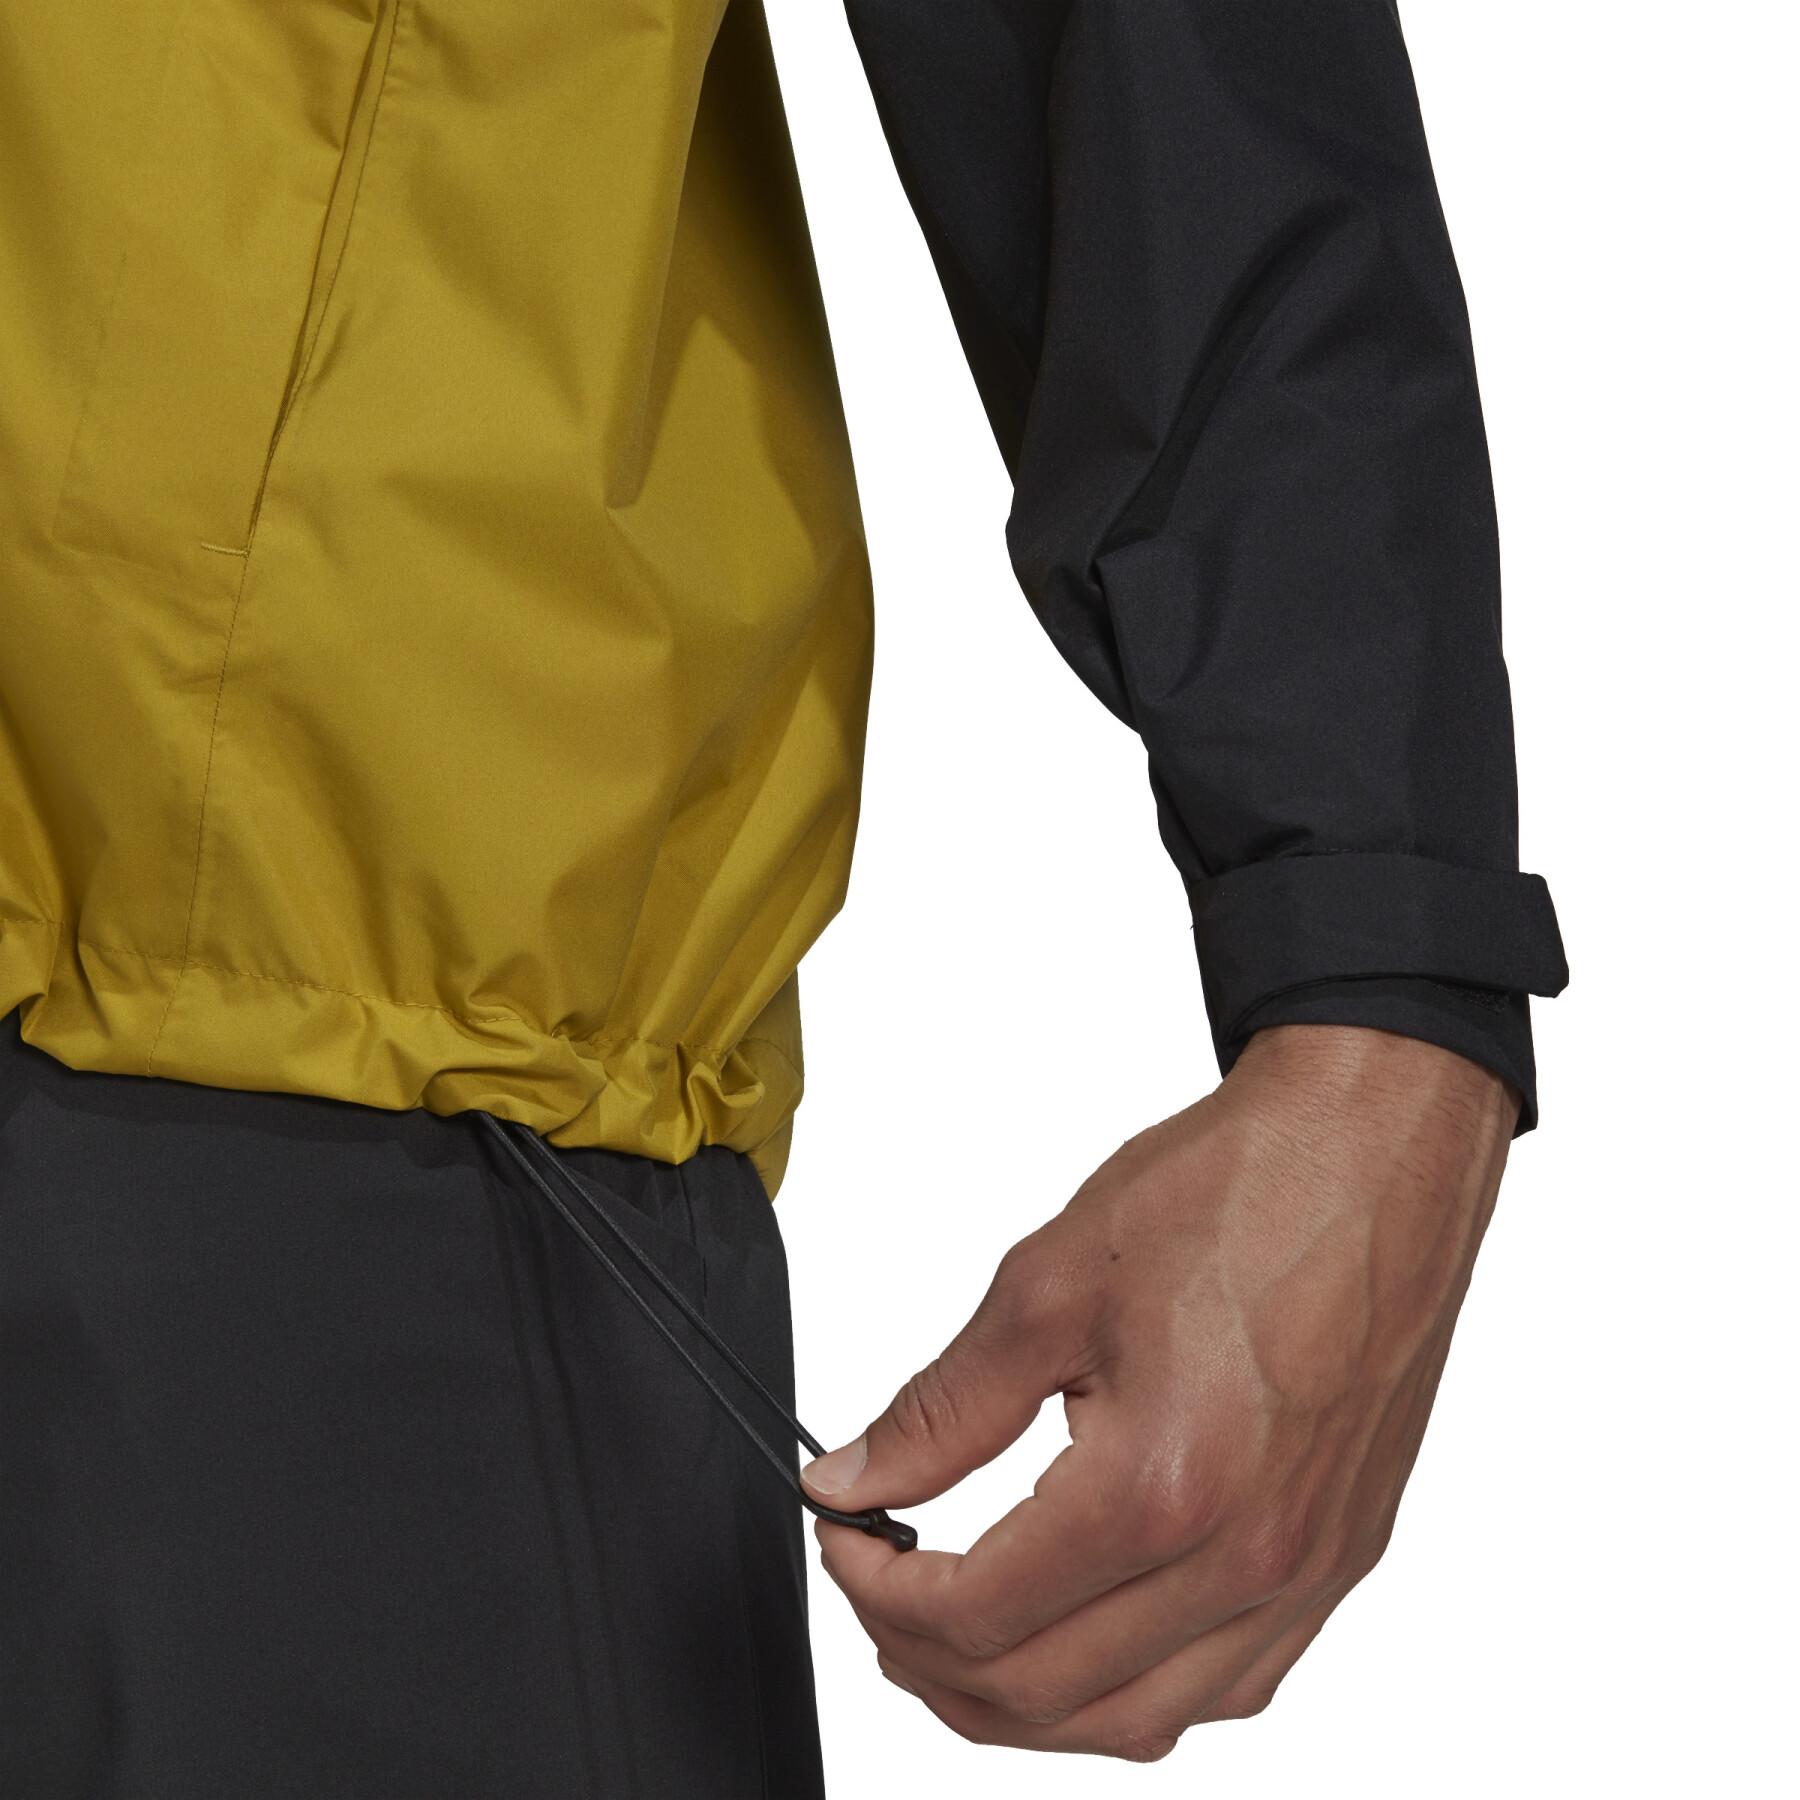 Two layer waterproof jacket adidas Terrex Multi Rain.Rdy